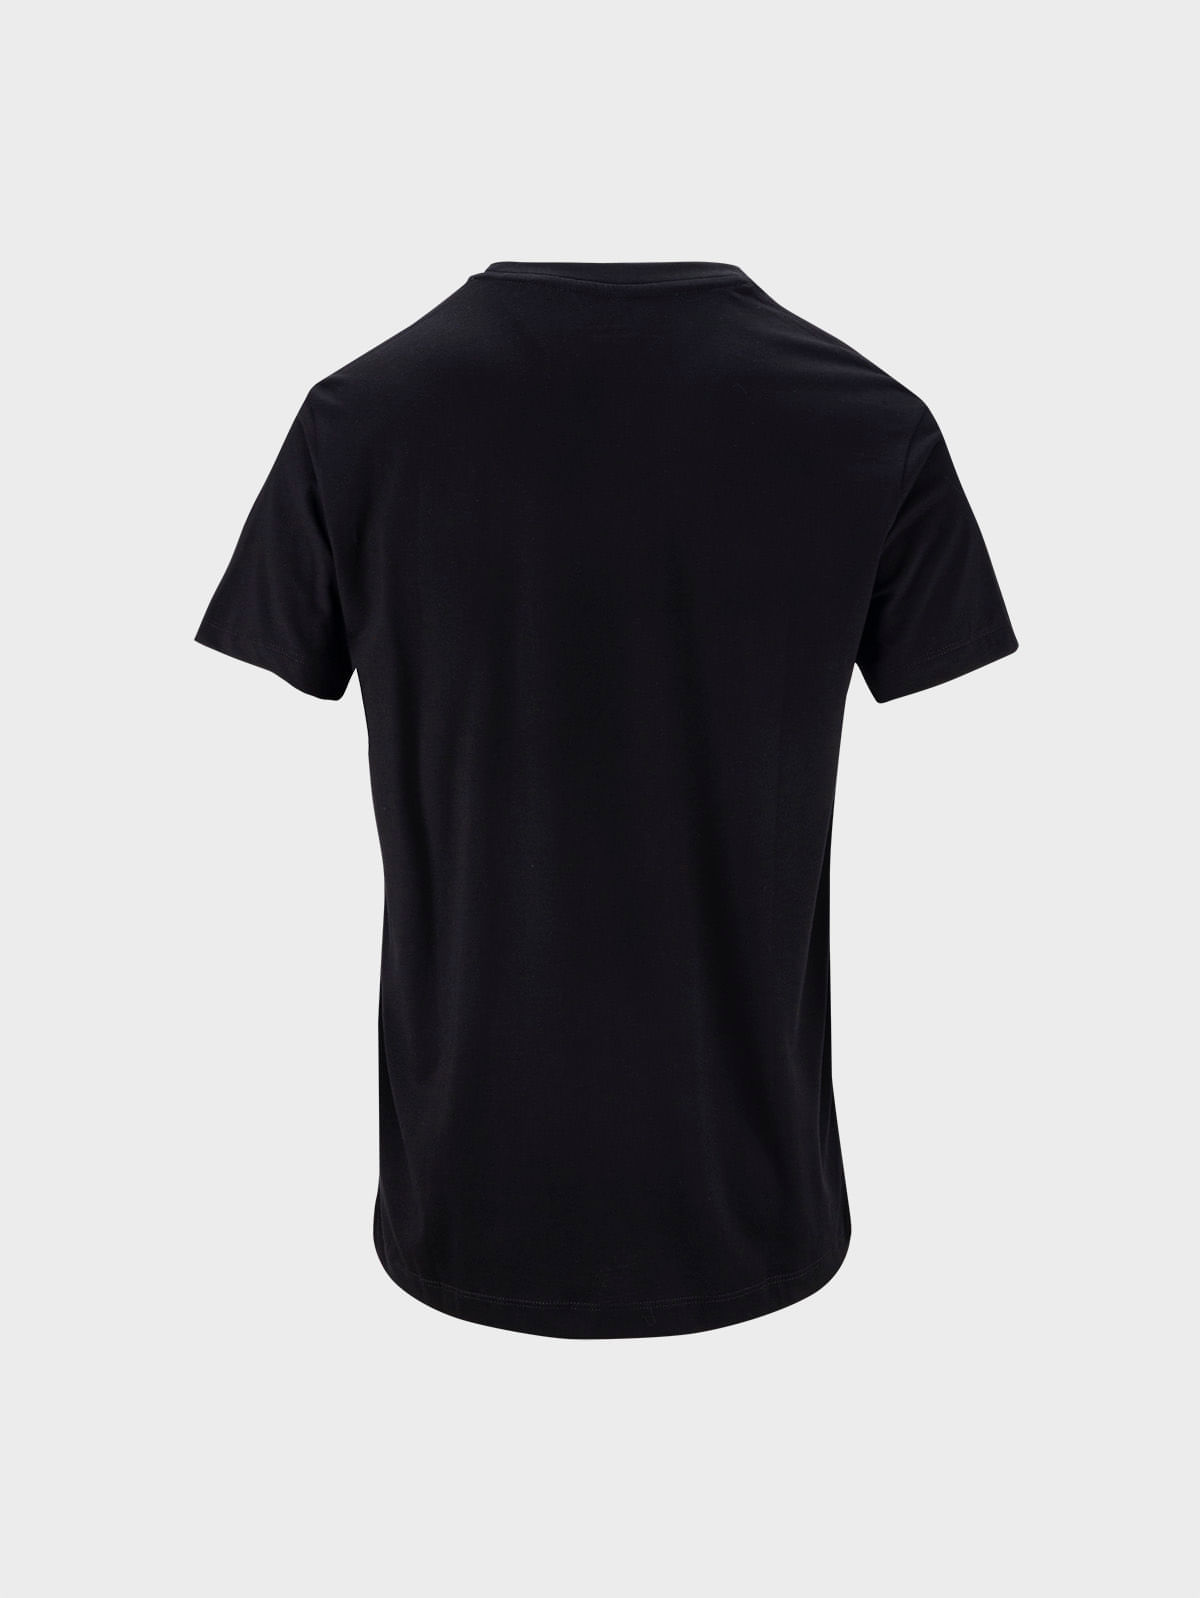 Camiseta para Caballero Compraymas Slim Fit Tirantes Talla L color Negro